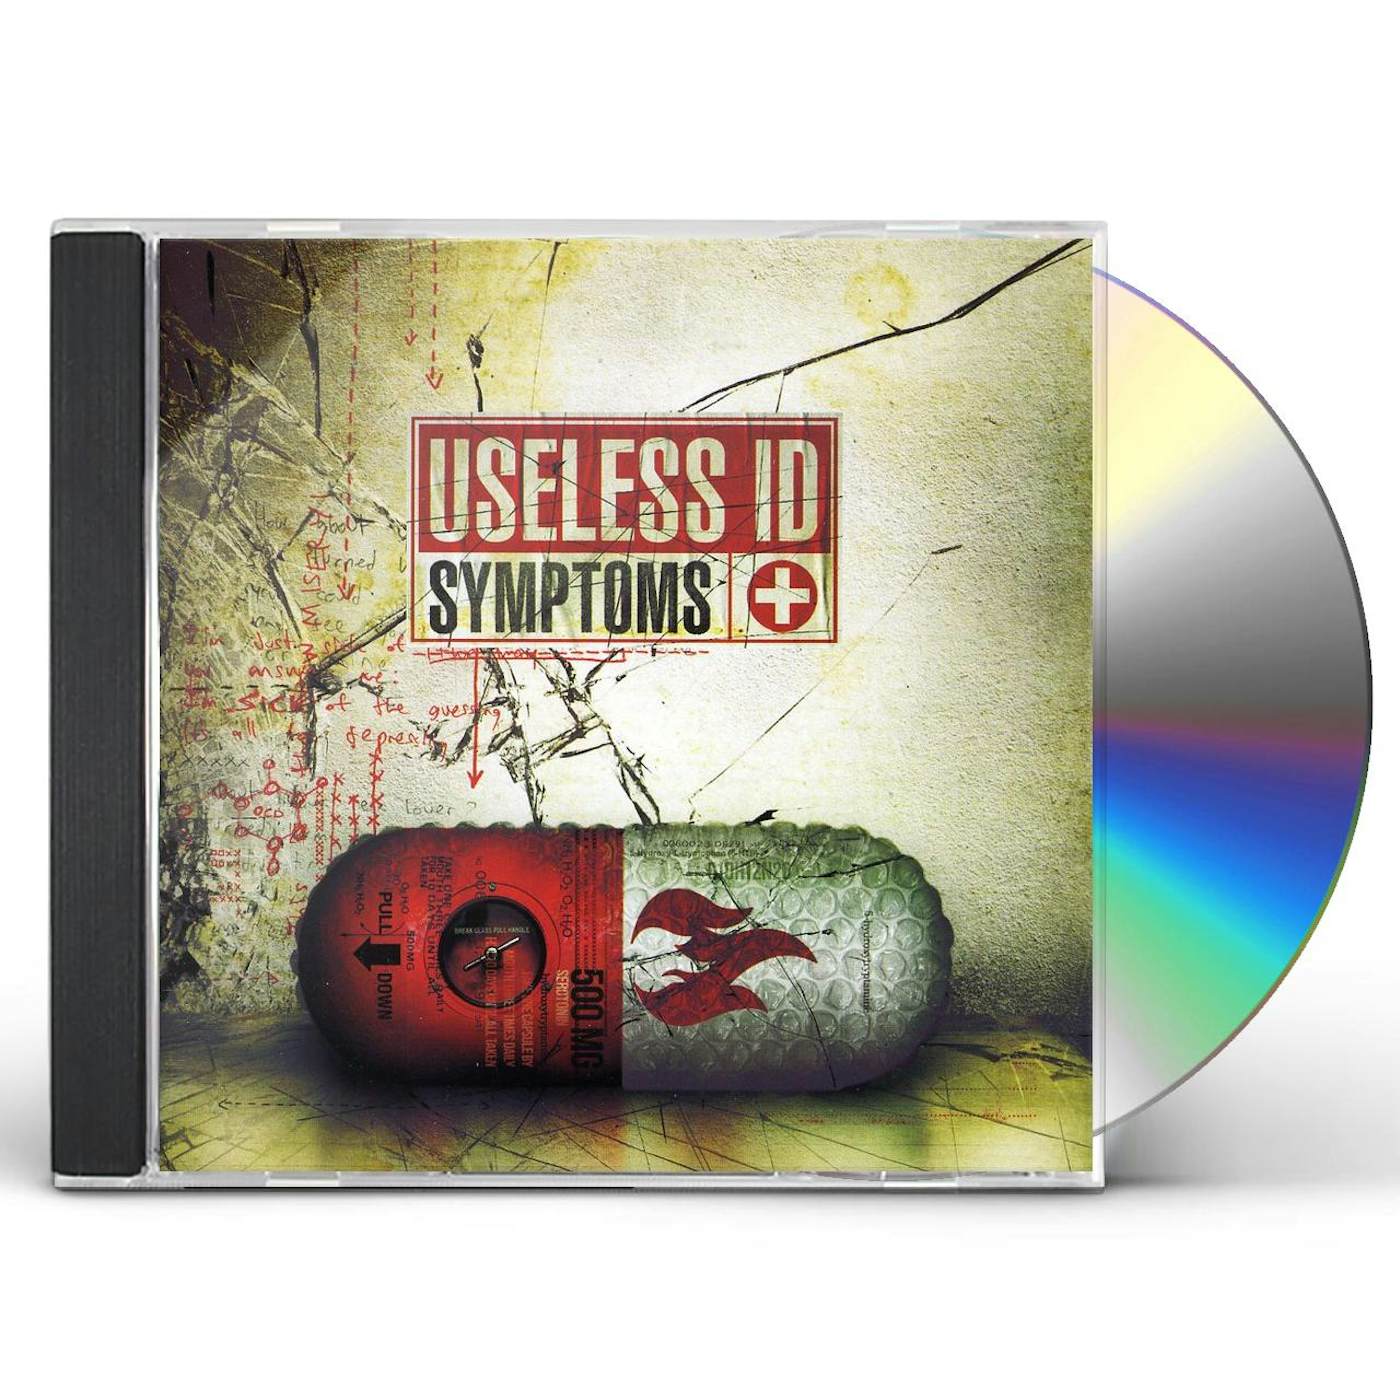 Useless Id SYMPTOMS CD